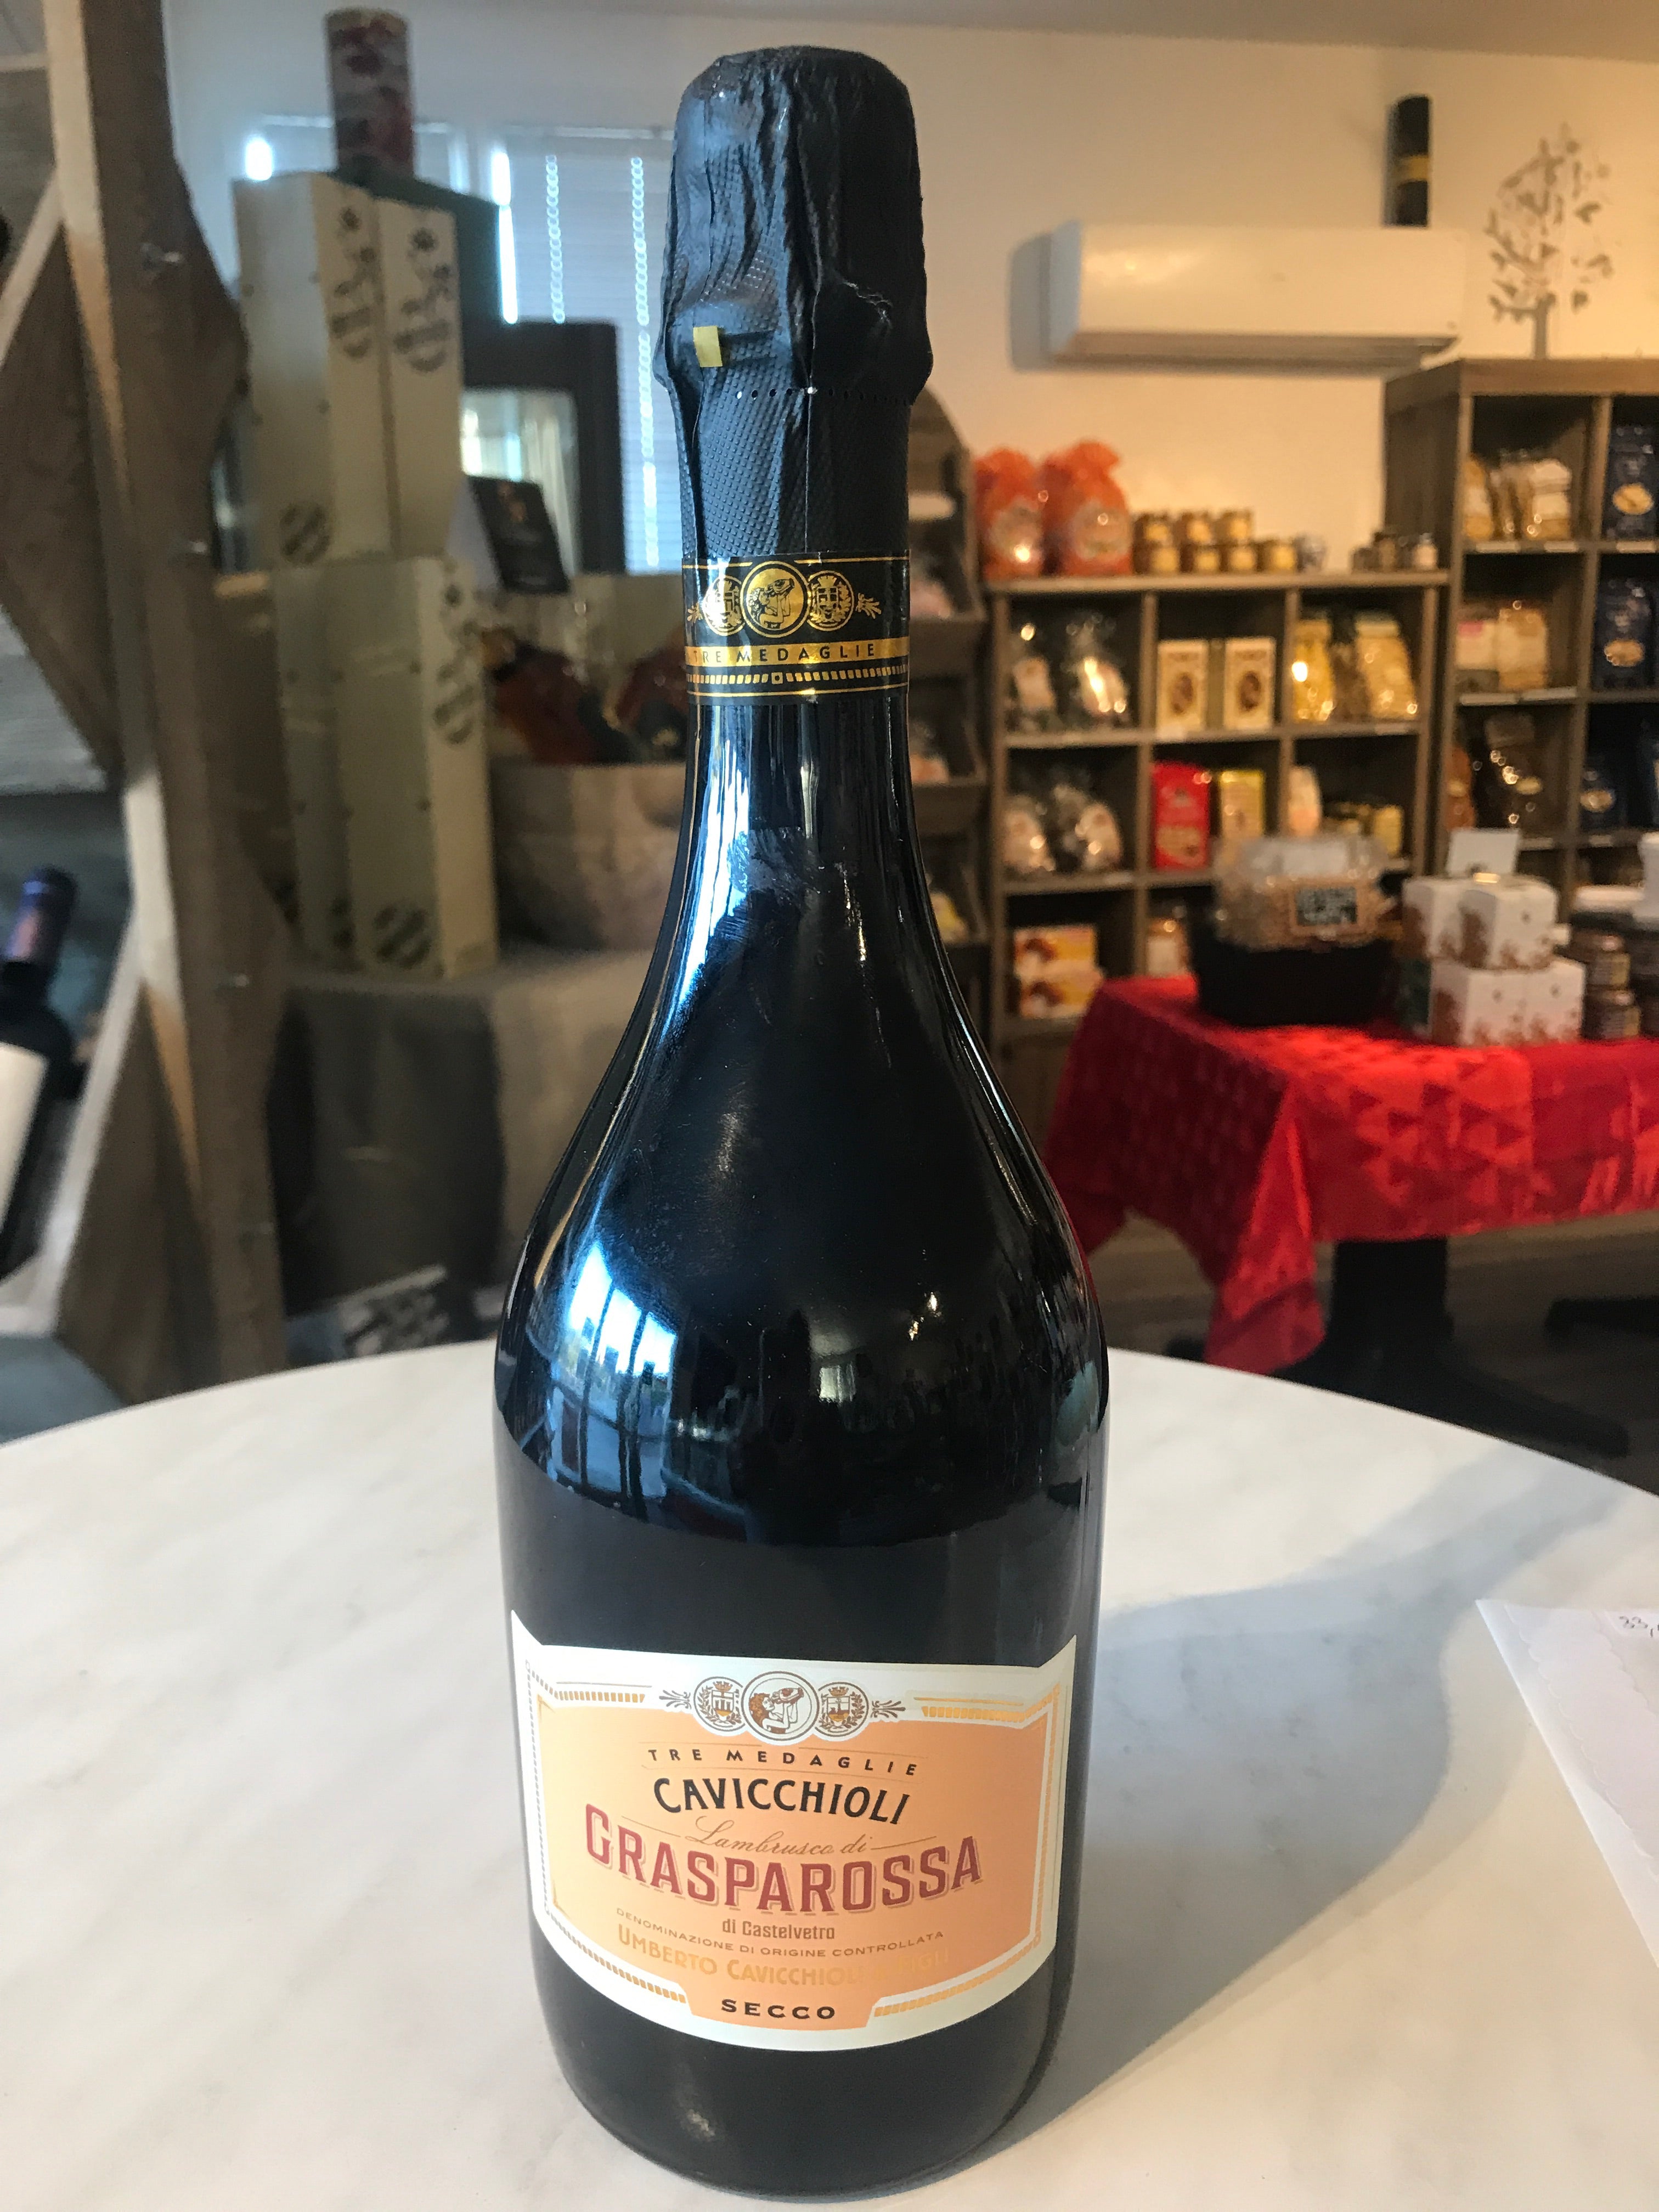 Vin Rouge Pétillant Lambrusco Secco Grasparossa  8°  0.75L